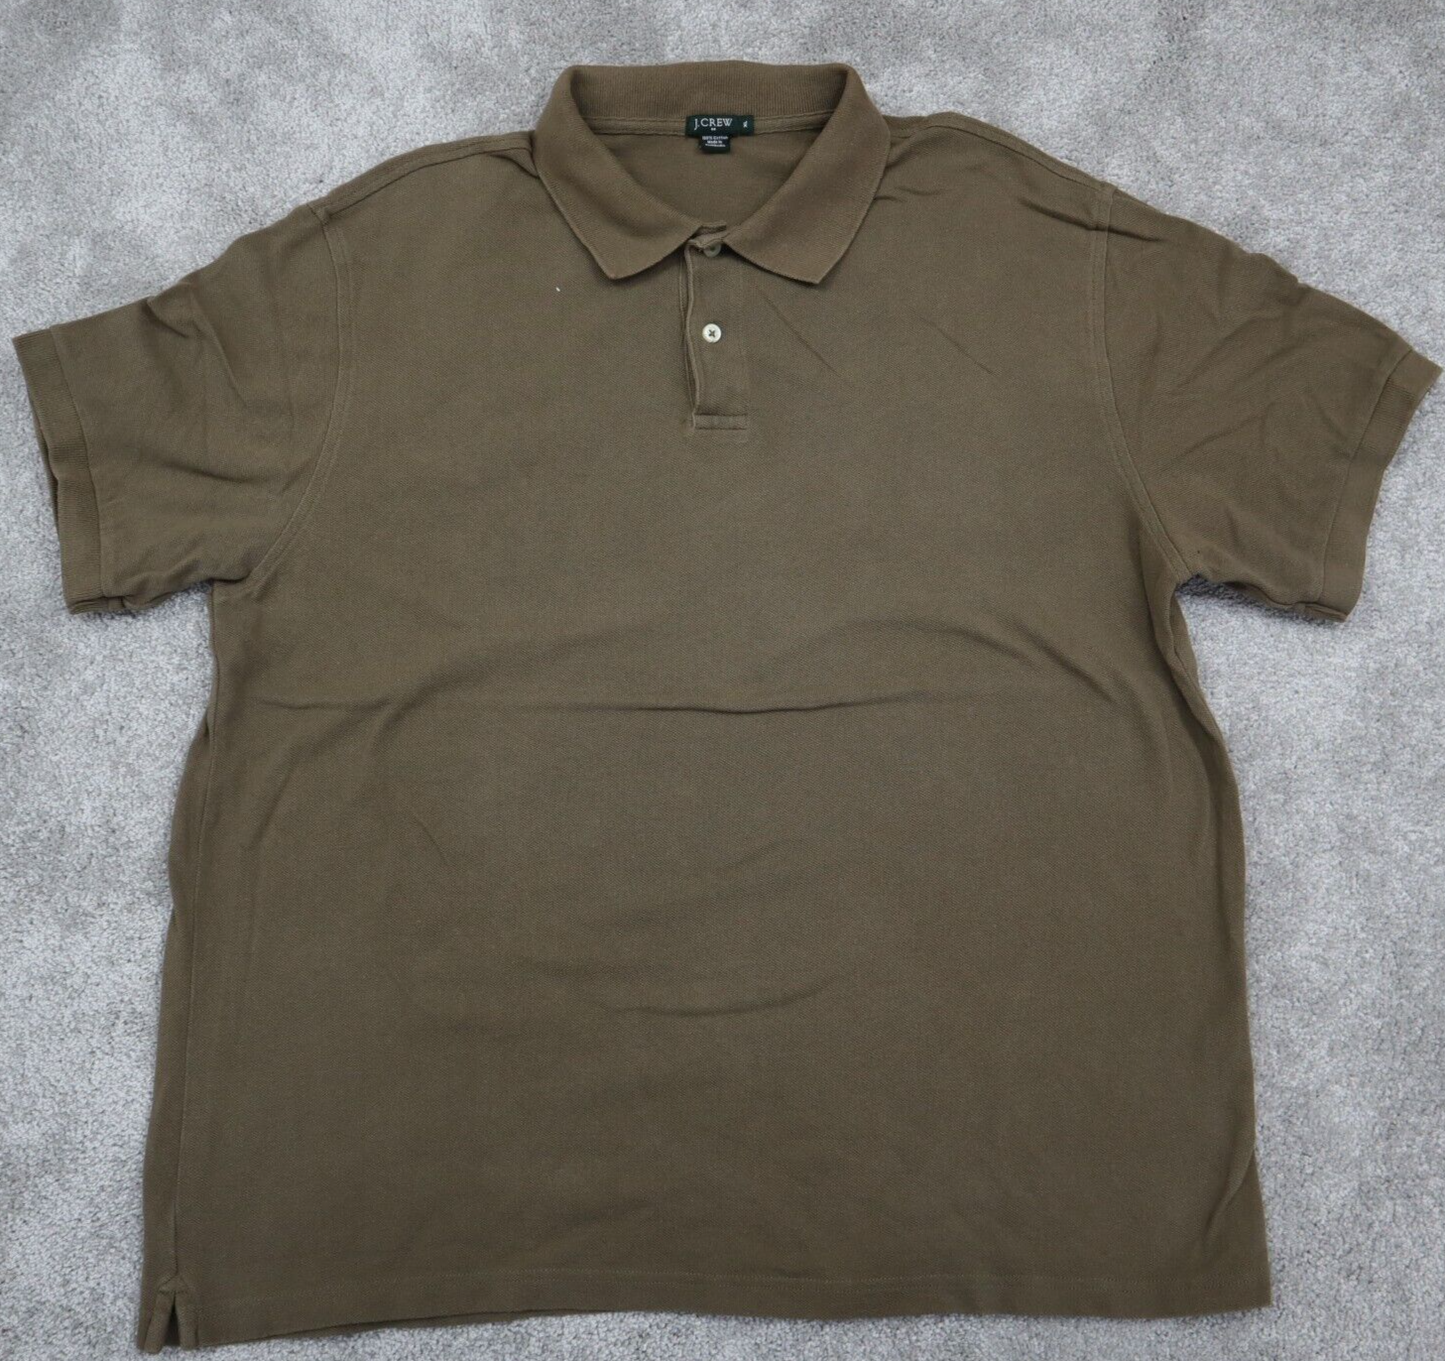 J.Crew Golf Polo Shirt Men's X-Large XL Brown Short Sleeves Collared Neck Shirt